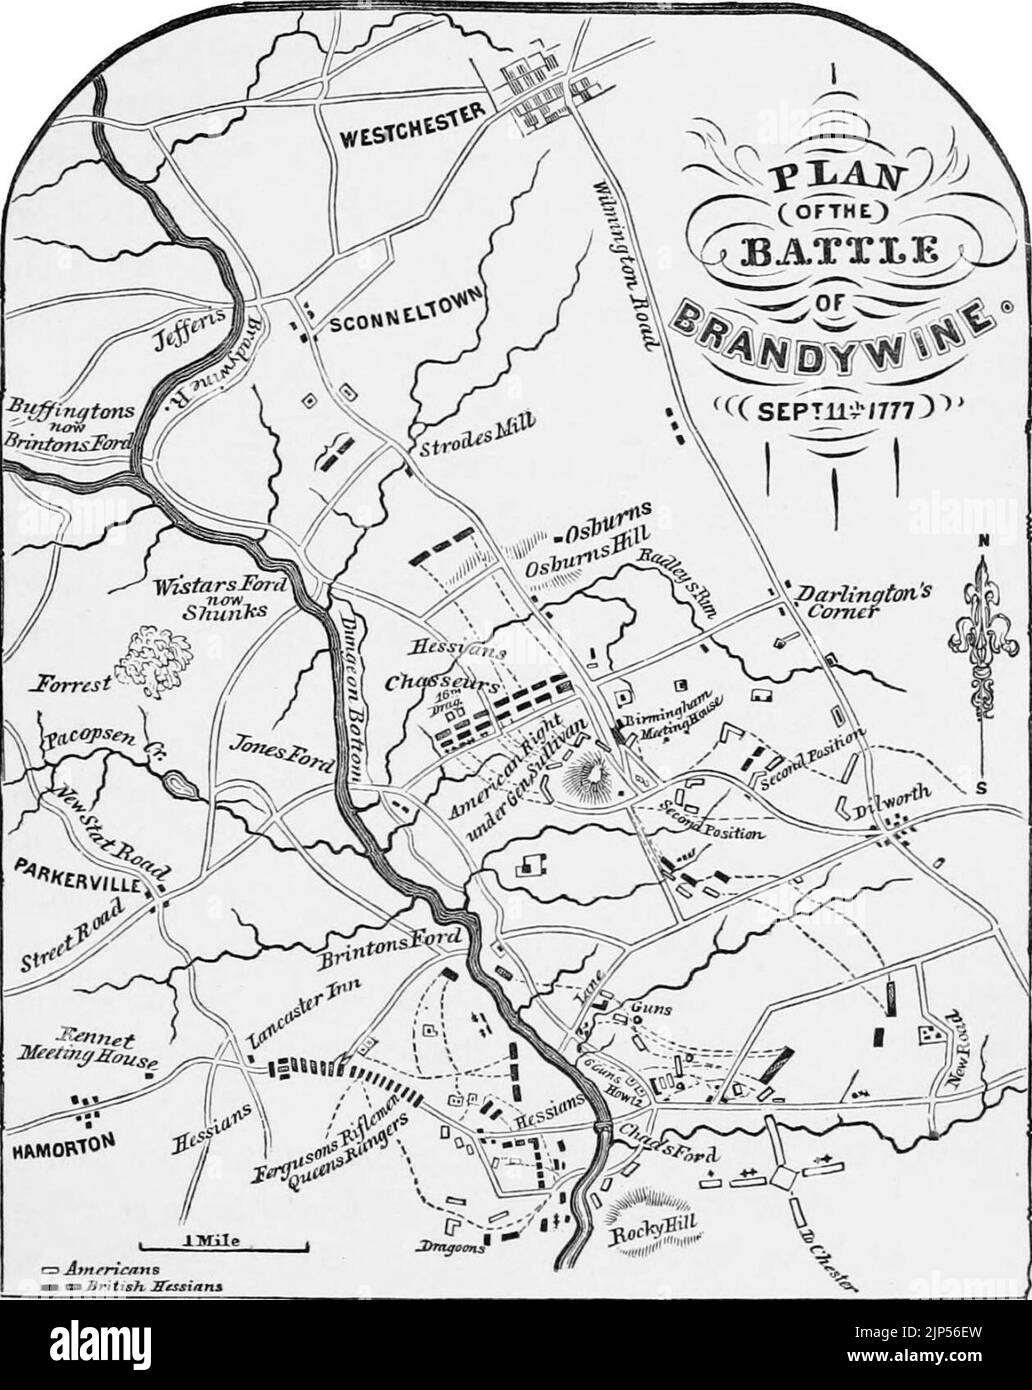 The Hessians - Battle of Brandywine Stock Photo